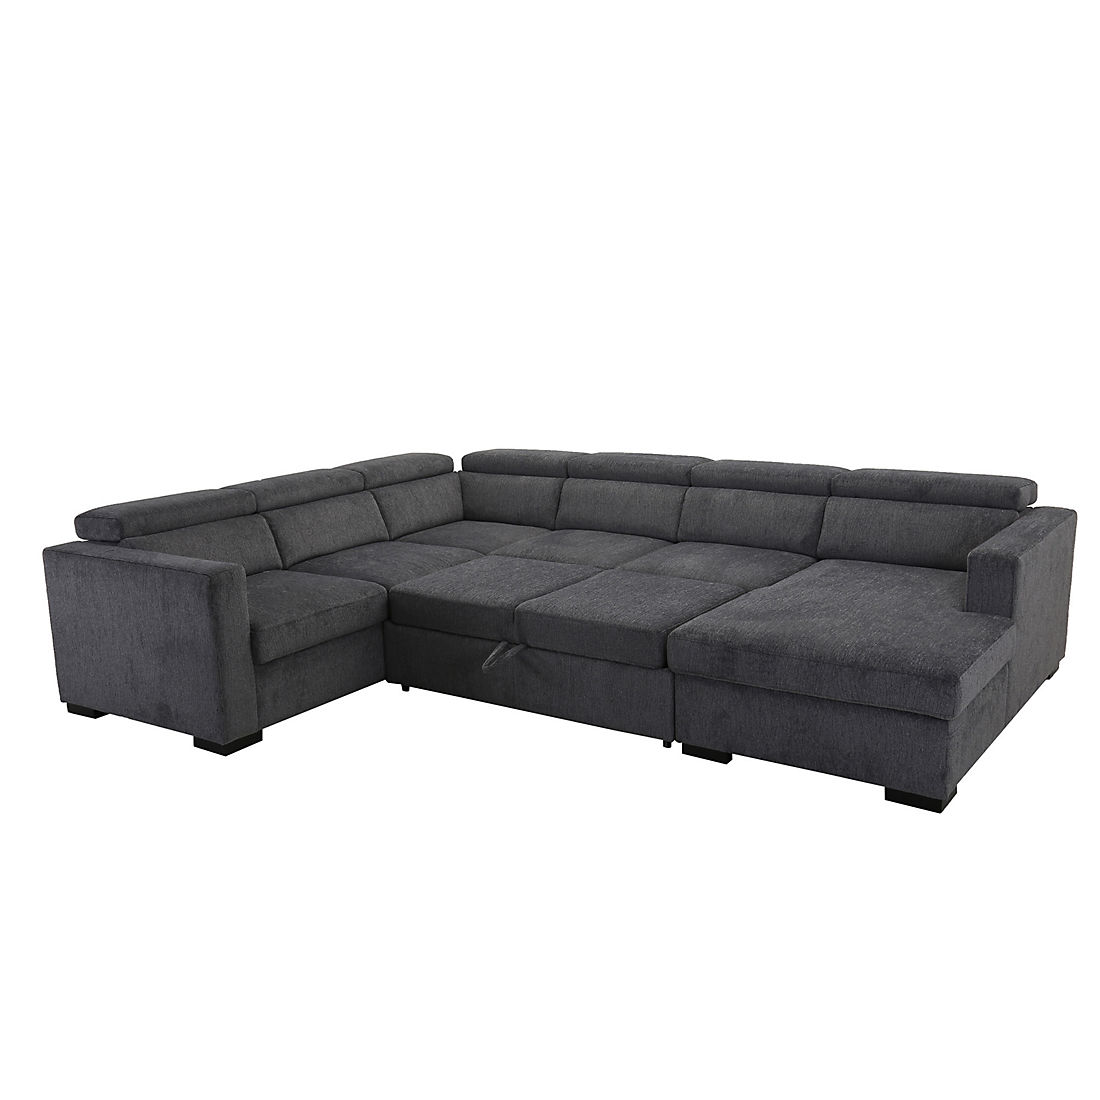 Stationary Sectional Sofa Set